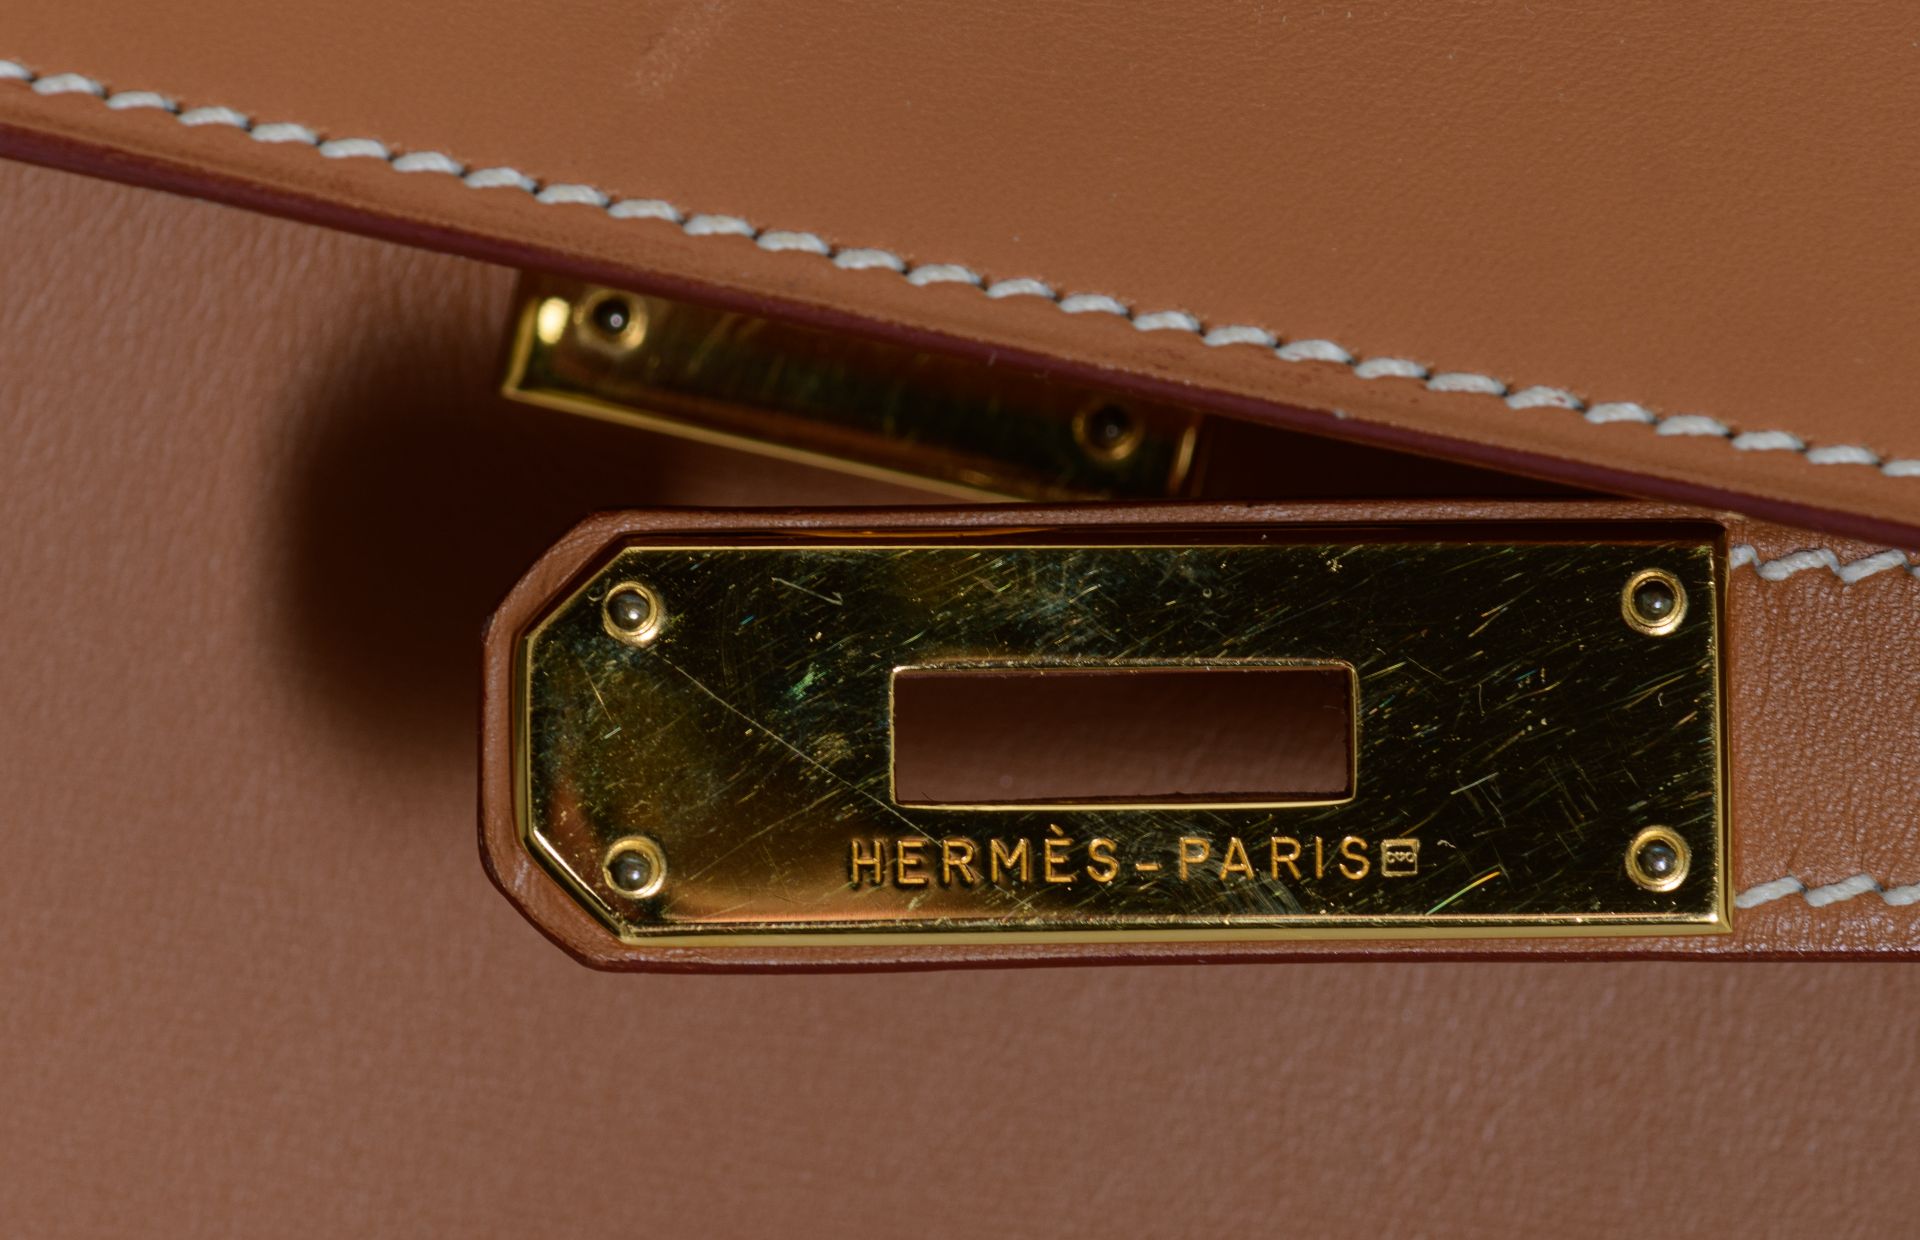 HERMÈS, Birkin 35 bag, Gold Barenia calfskin leather, with gilt metal hardware - Image 10 of 23